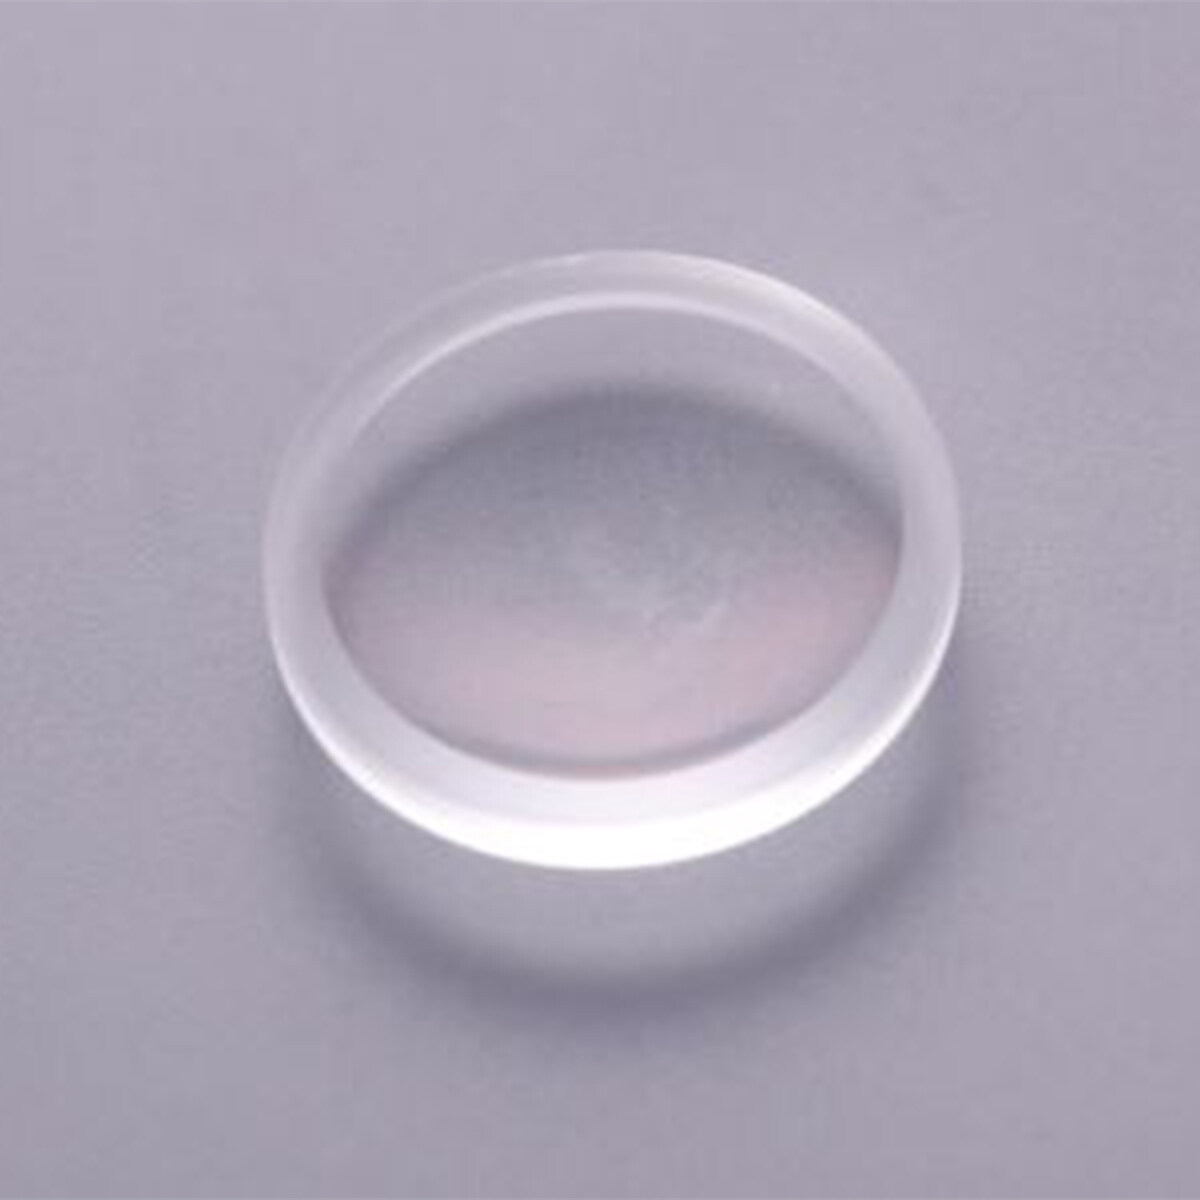 achromatic lens 제조 업체, achromatic lens design, achromatic doublet lens design